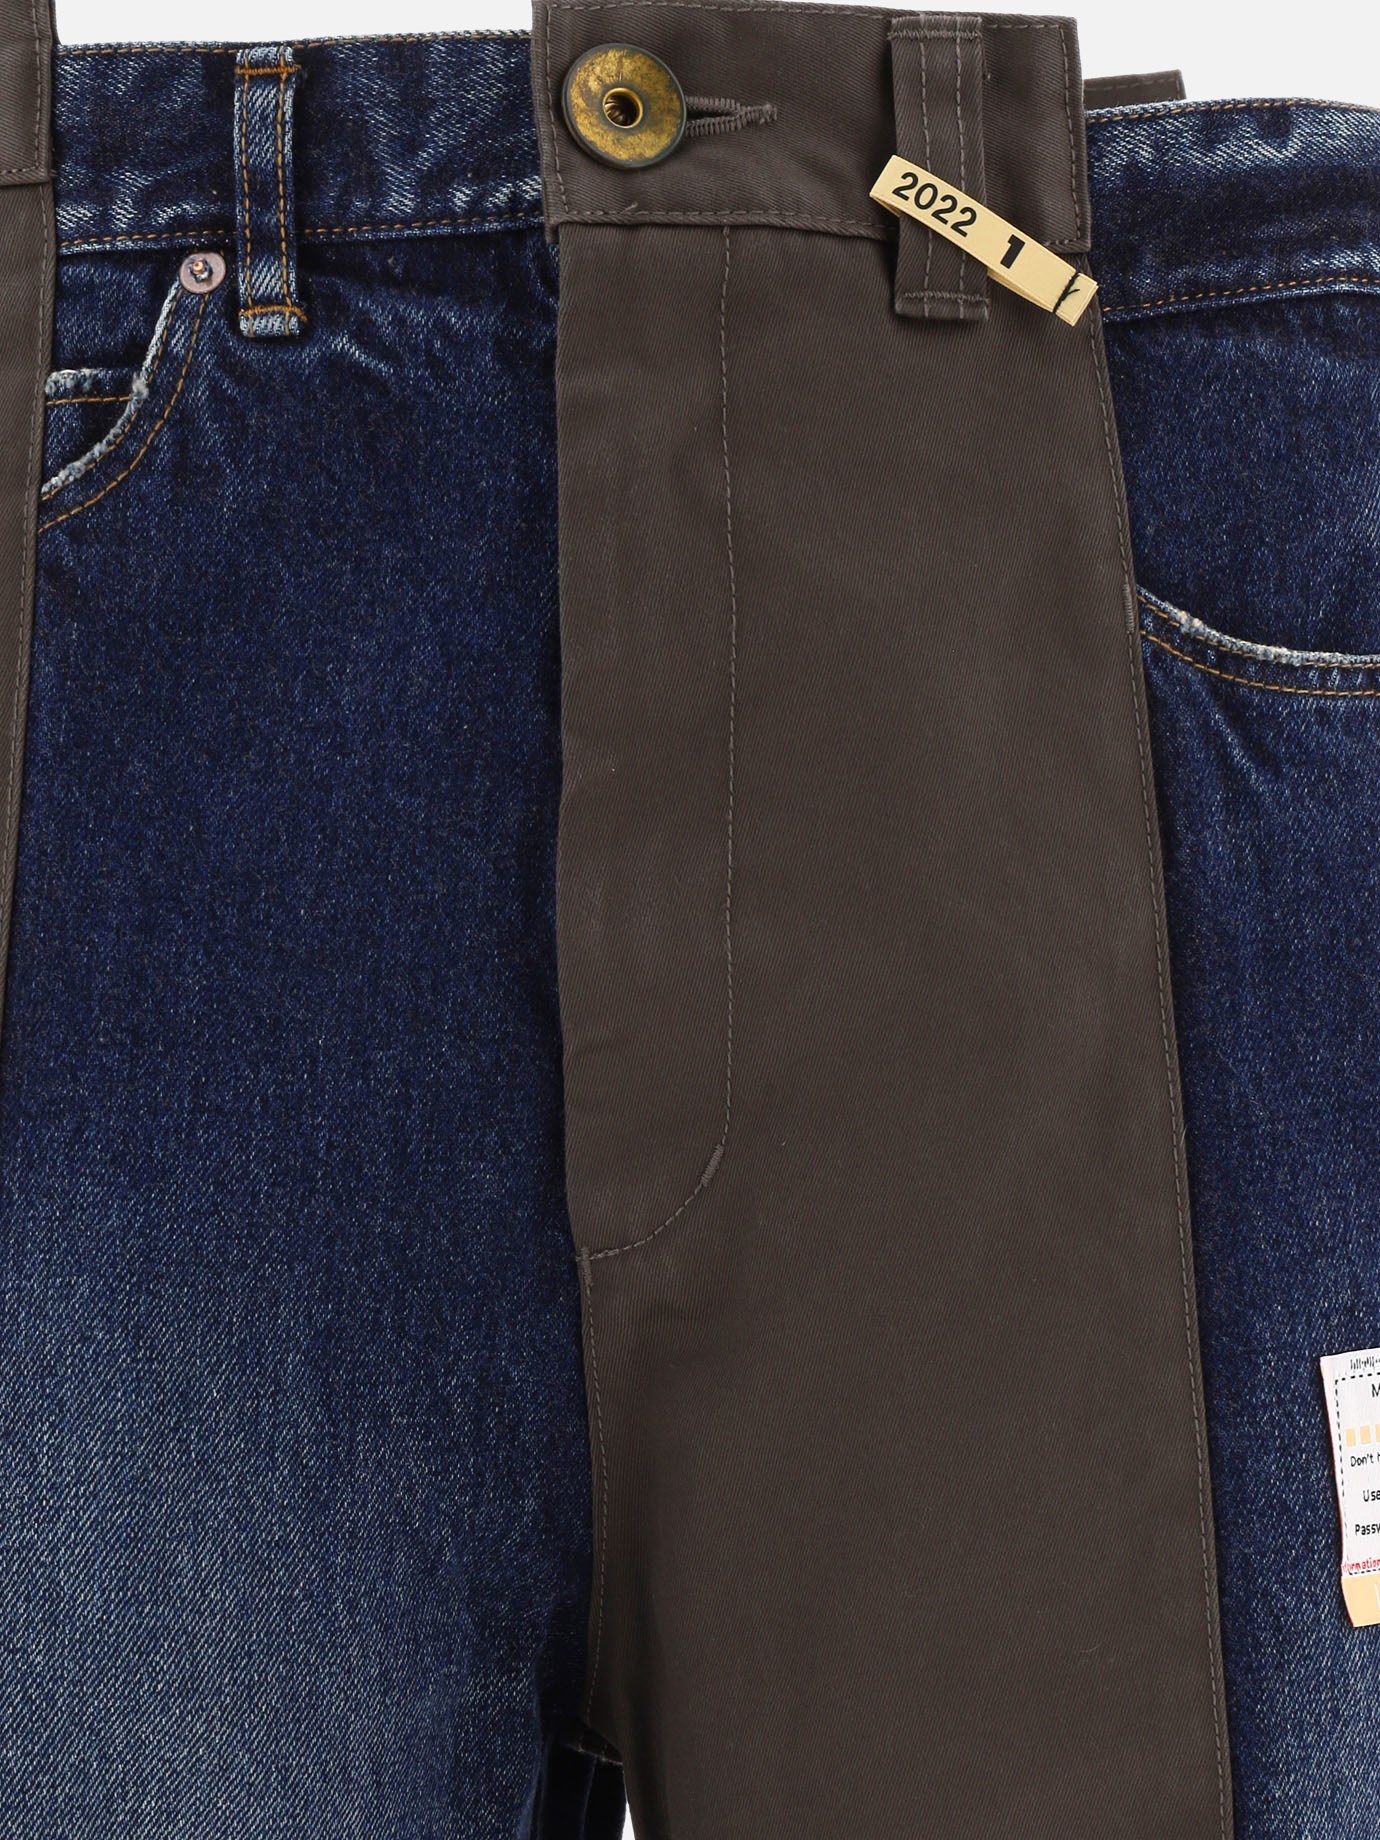  Panel Combined  jeans by Maison Mihara Yasuhiro